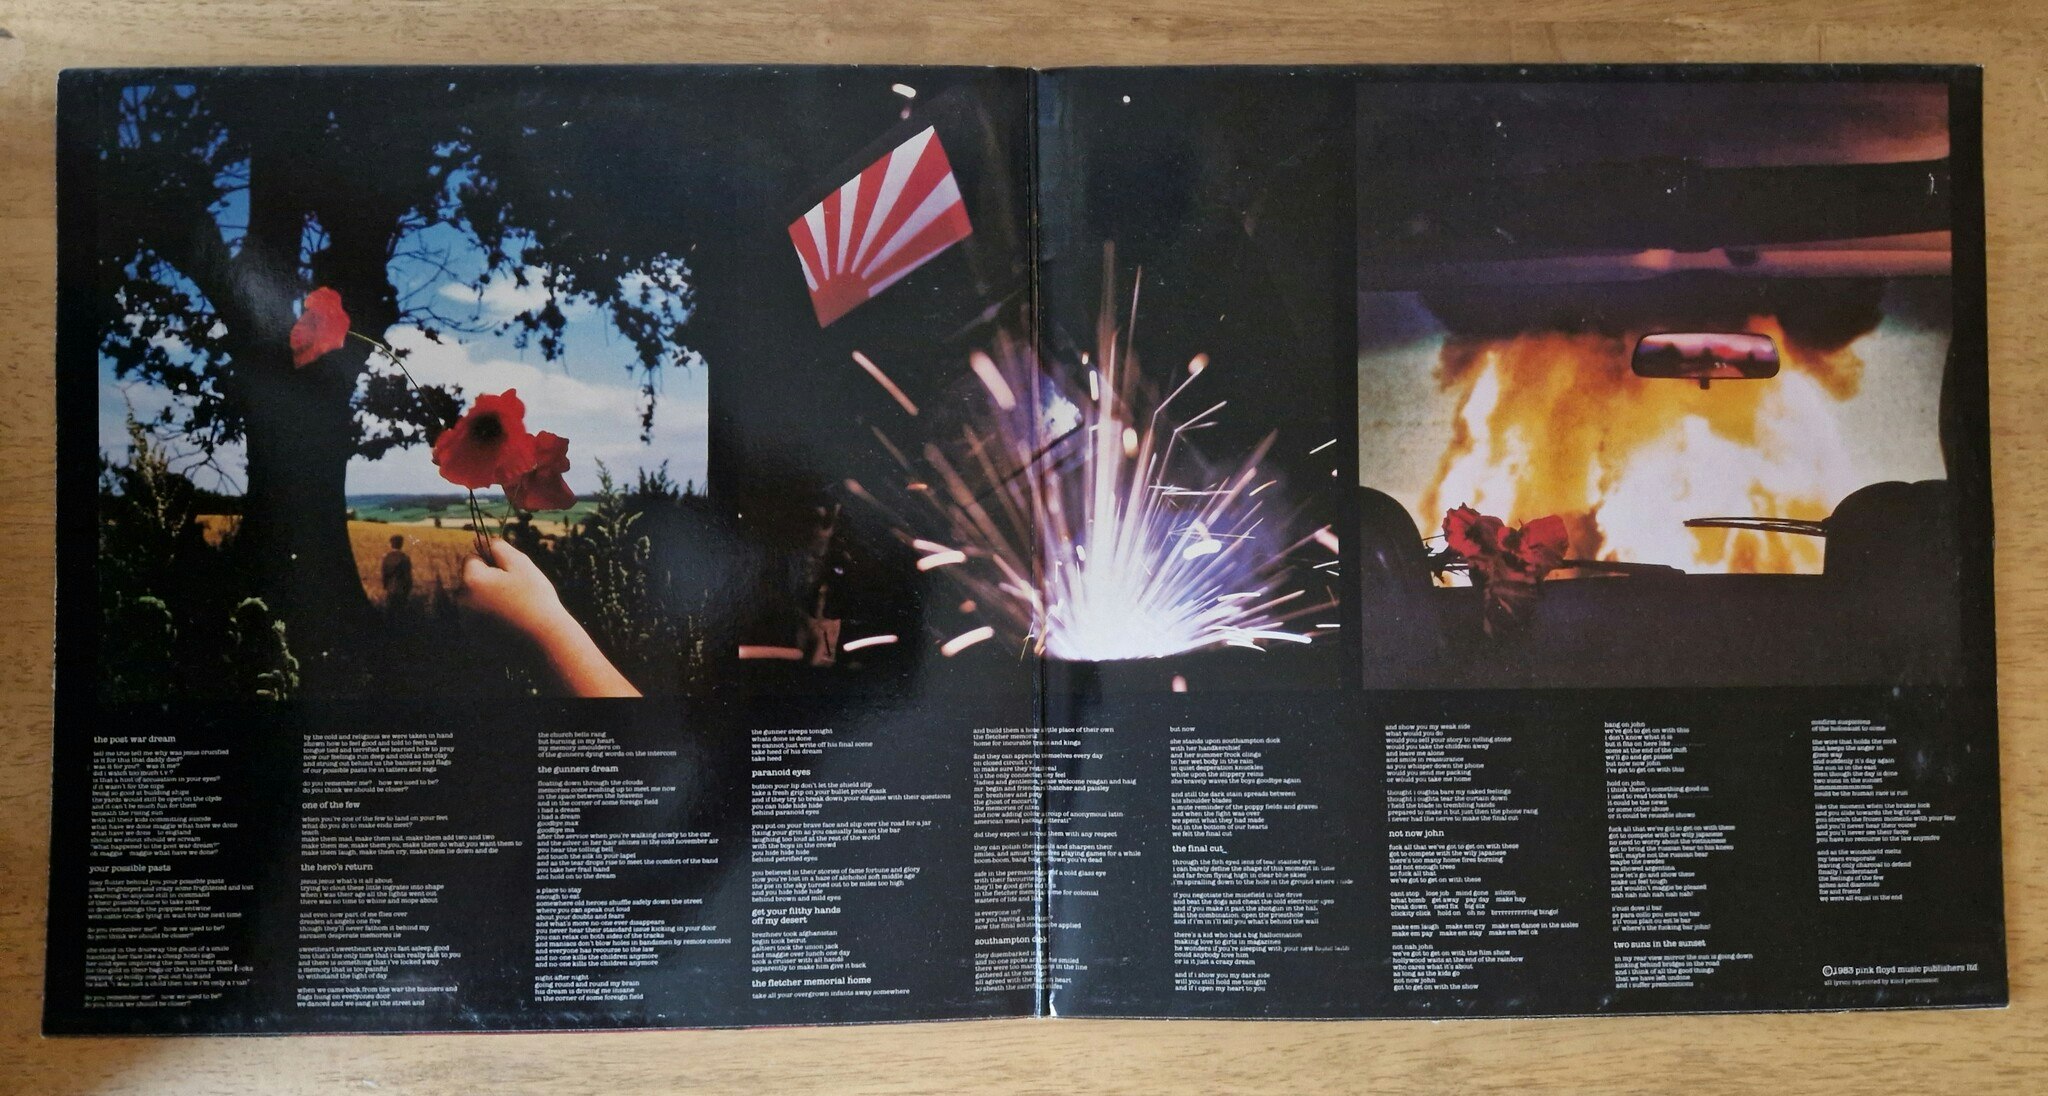 Pink Floyd, The Final Cut. Vinyl LP